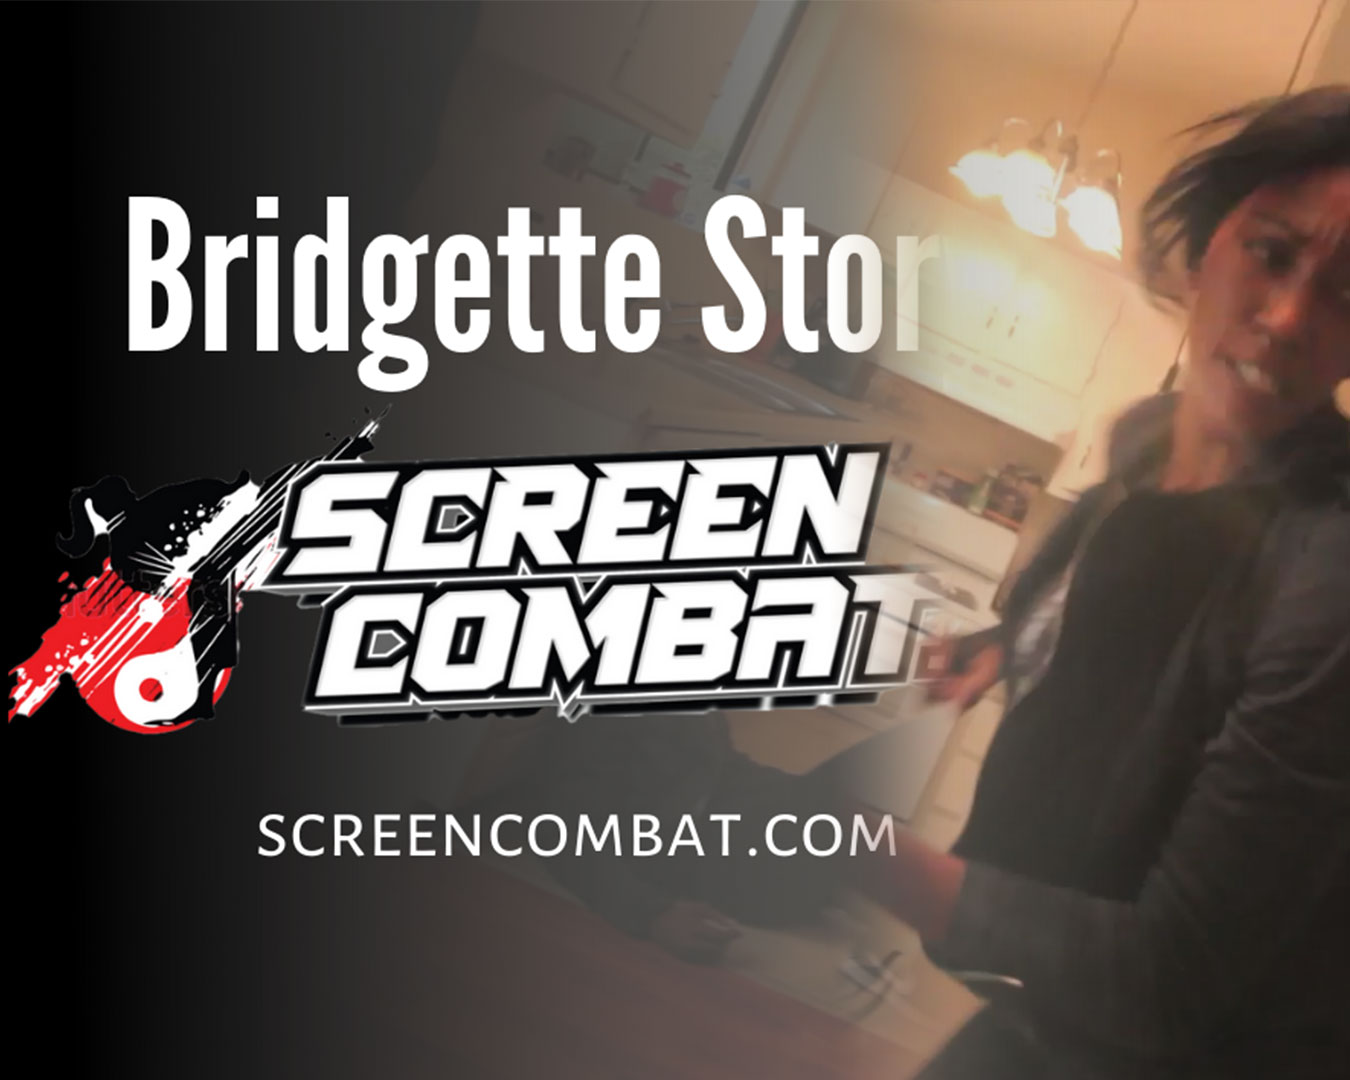 #5: Bridgette's Story